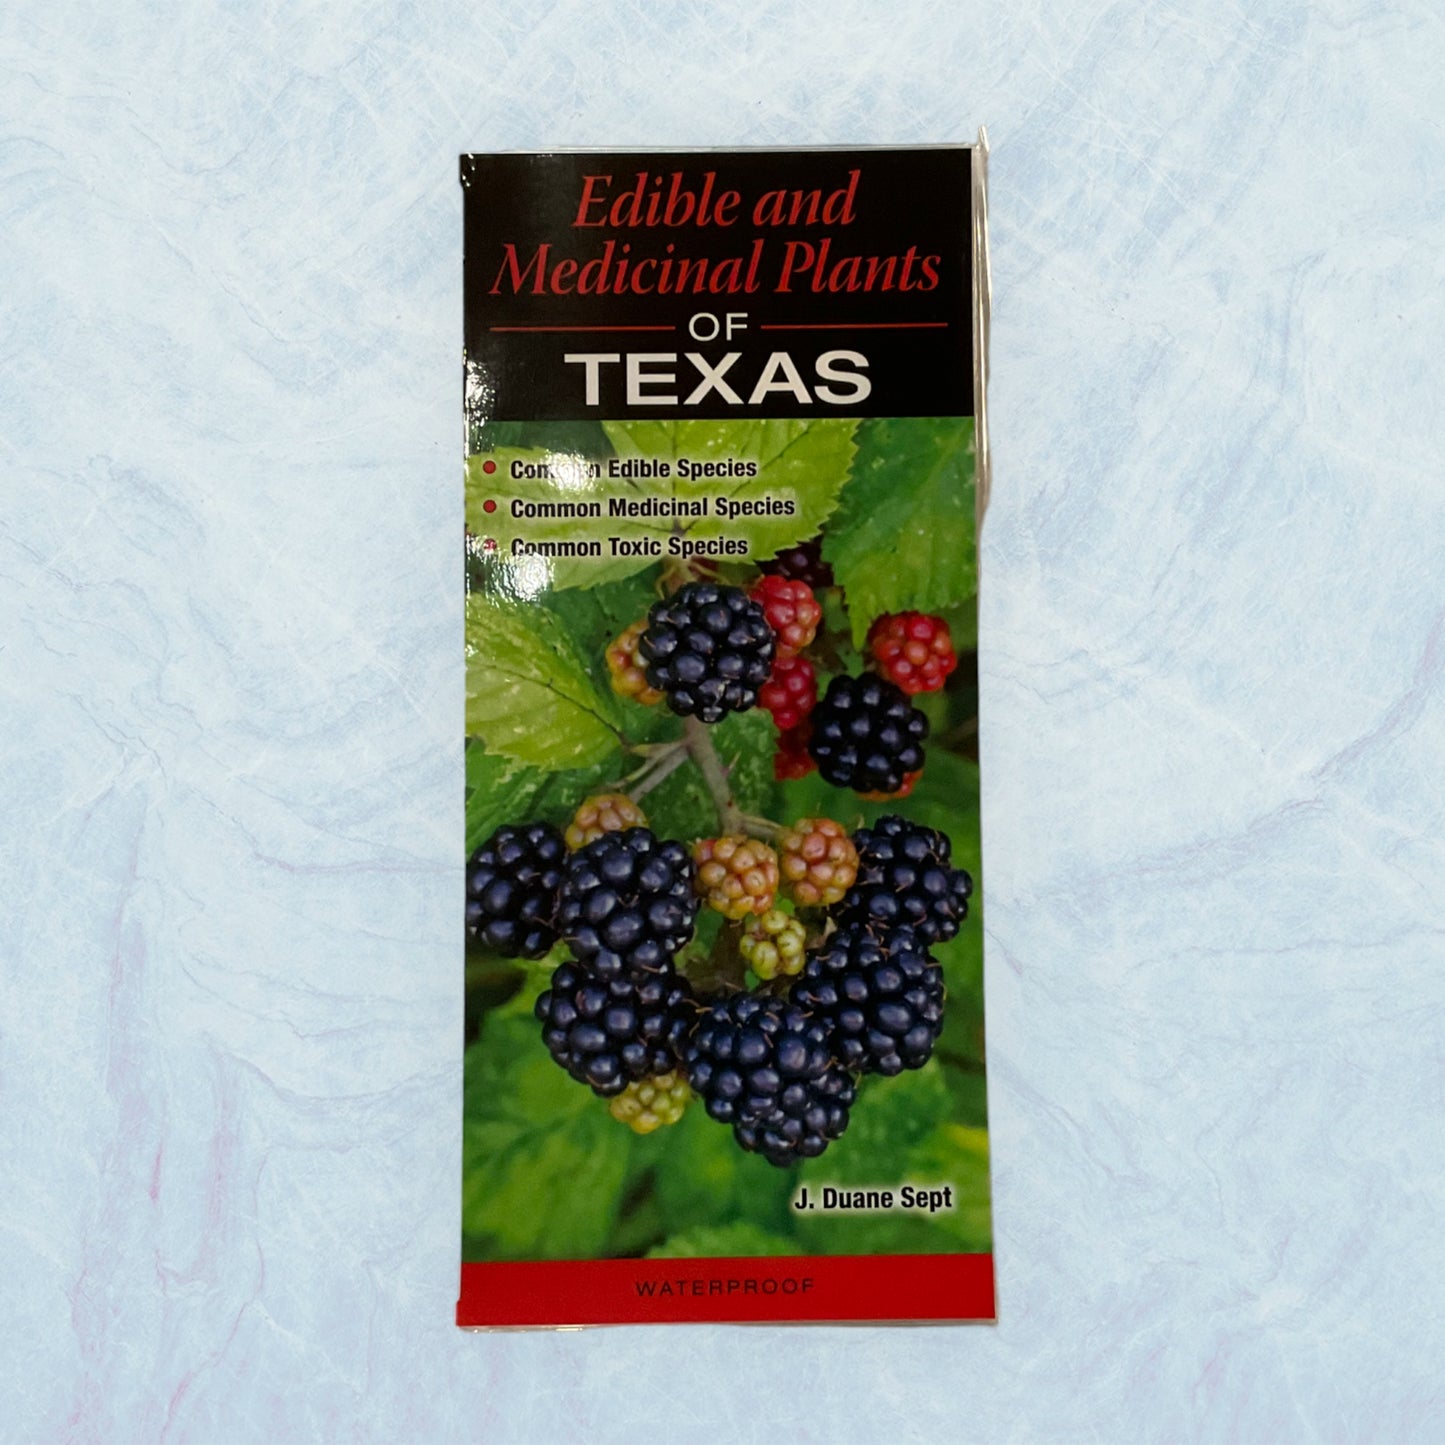 Guide - Edible and Medicinal Plants of Texas